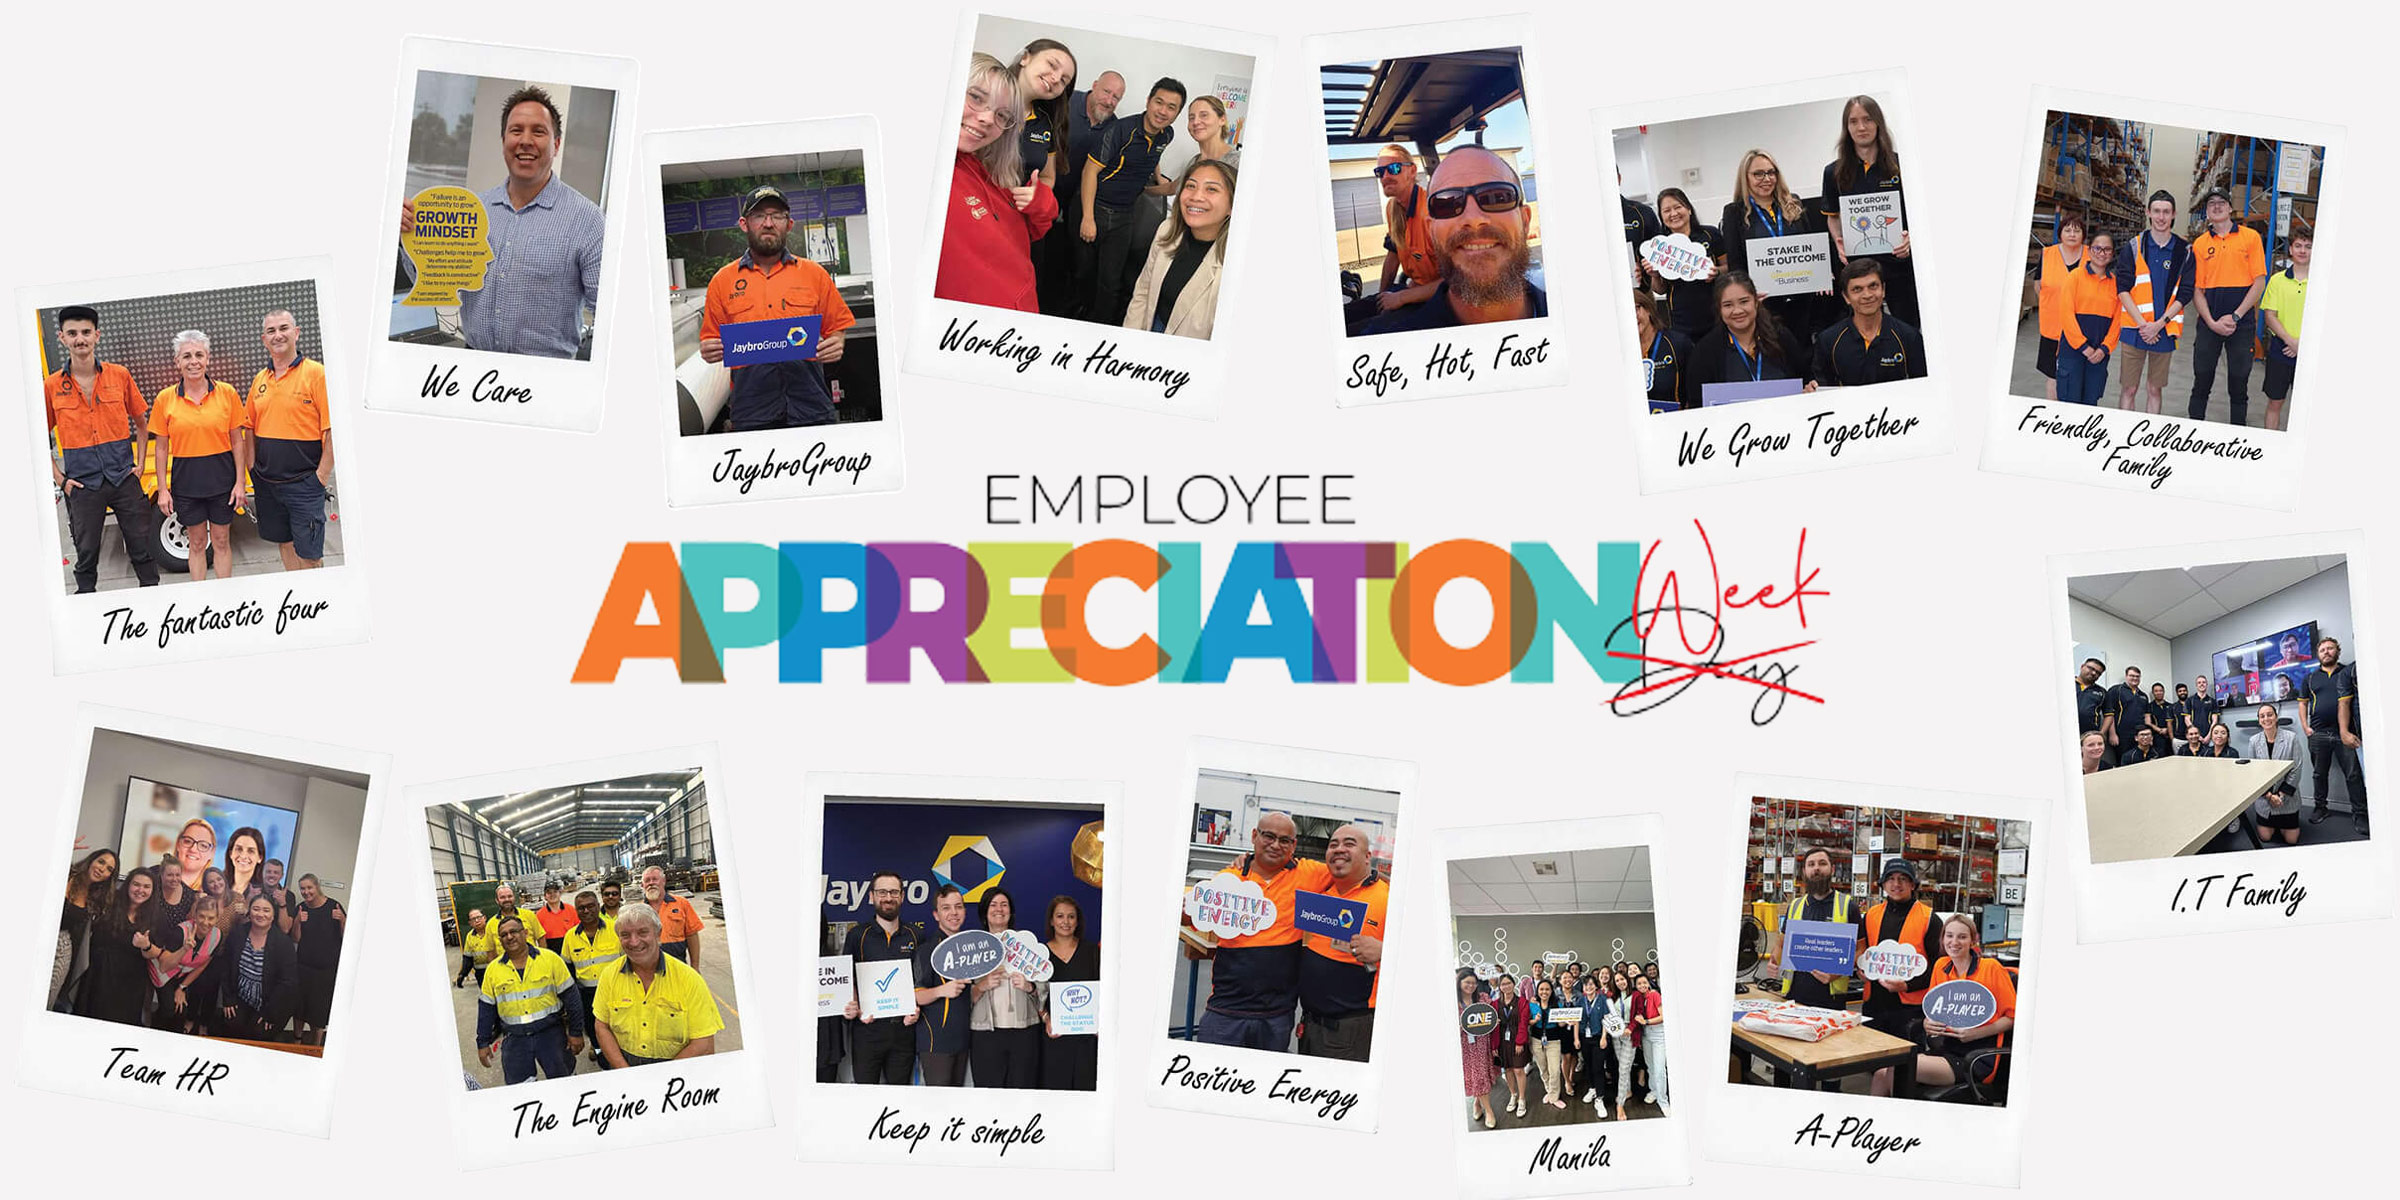 Celebrating Employee Appreciation Day the Jaybro Way!